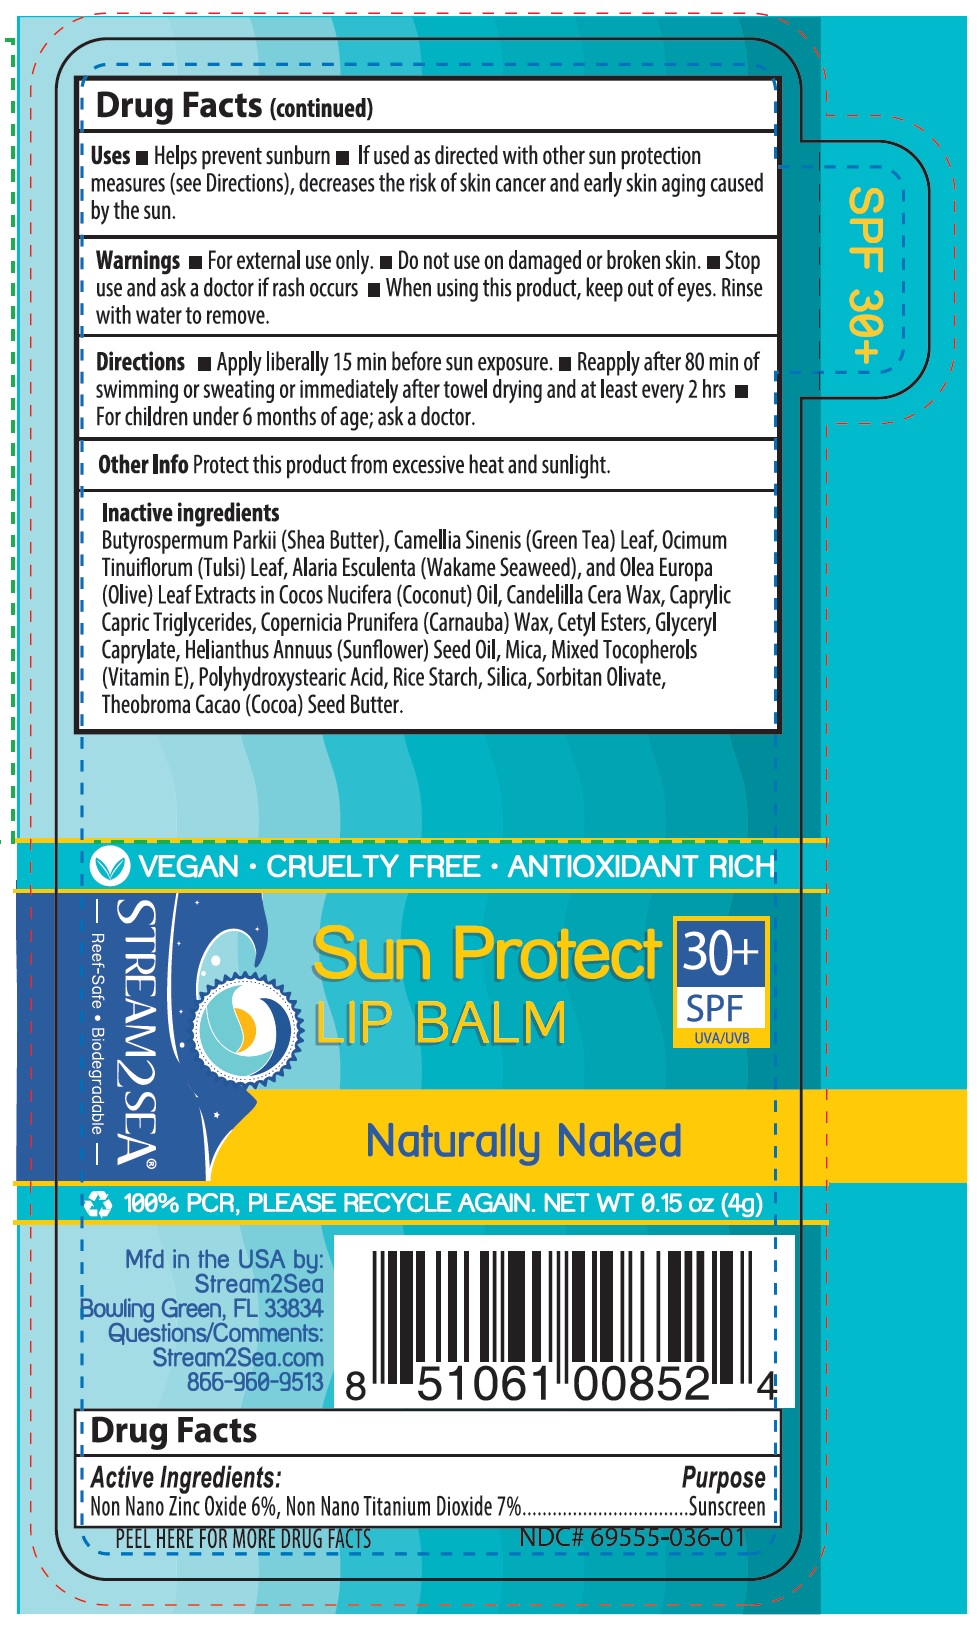 SUN PROTECT LIP BALM NATURALLY NAKED - Label